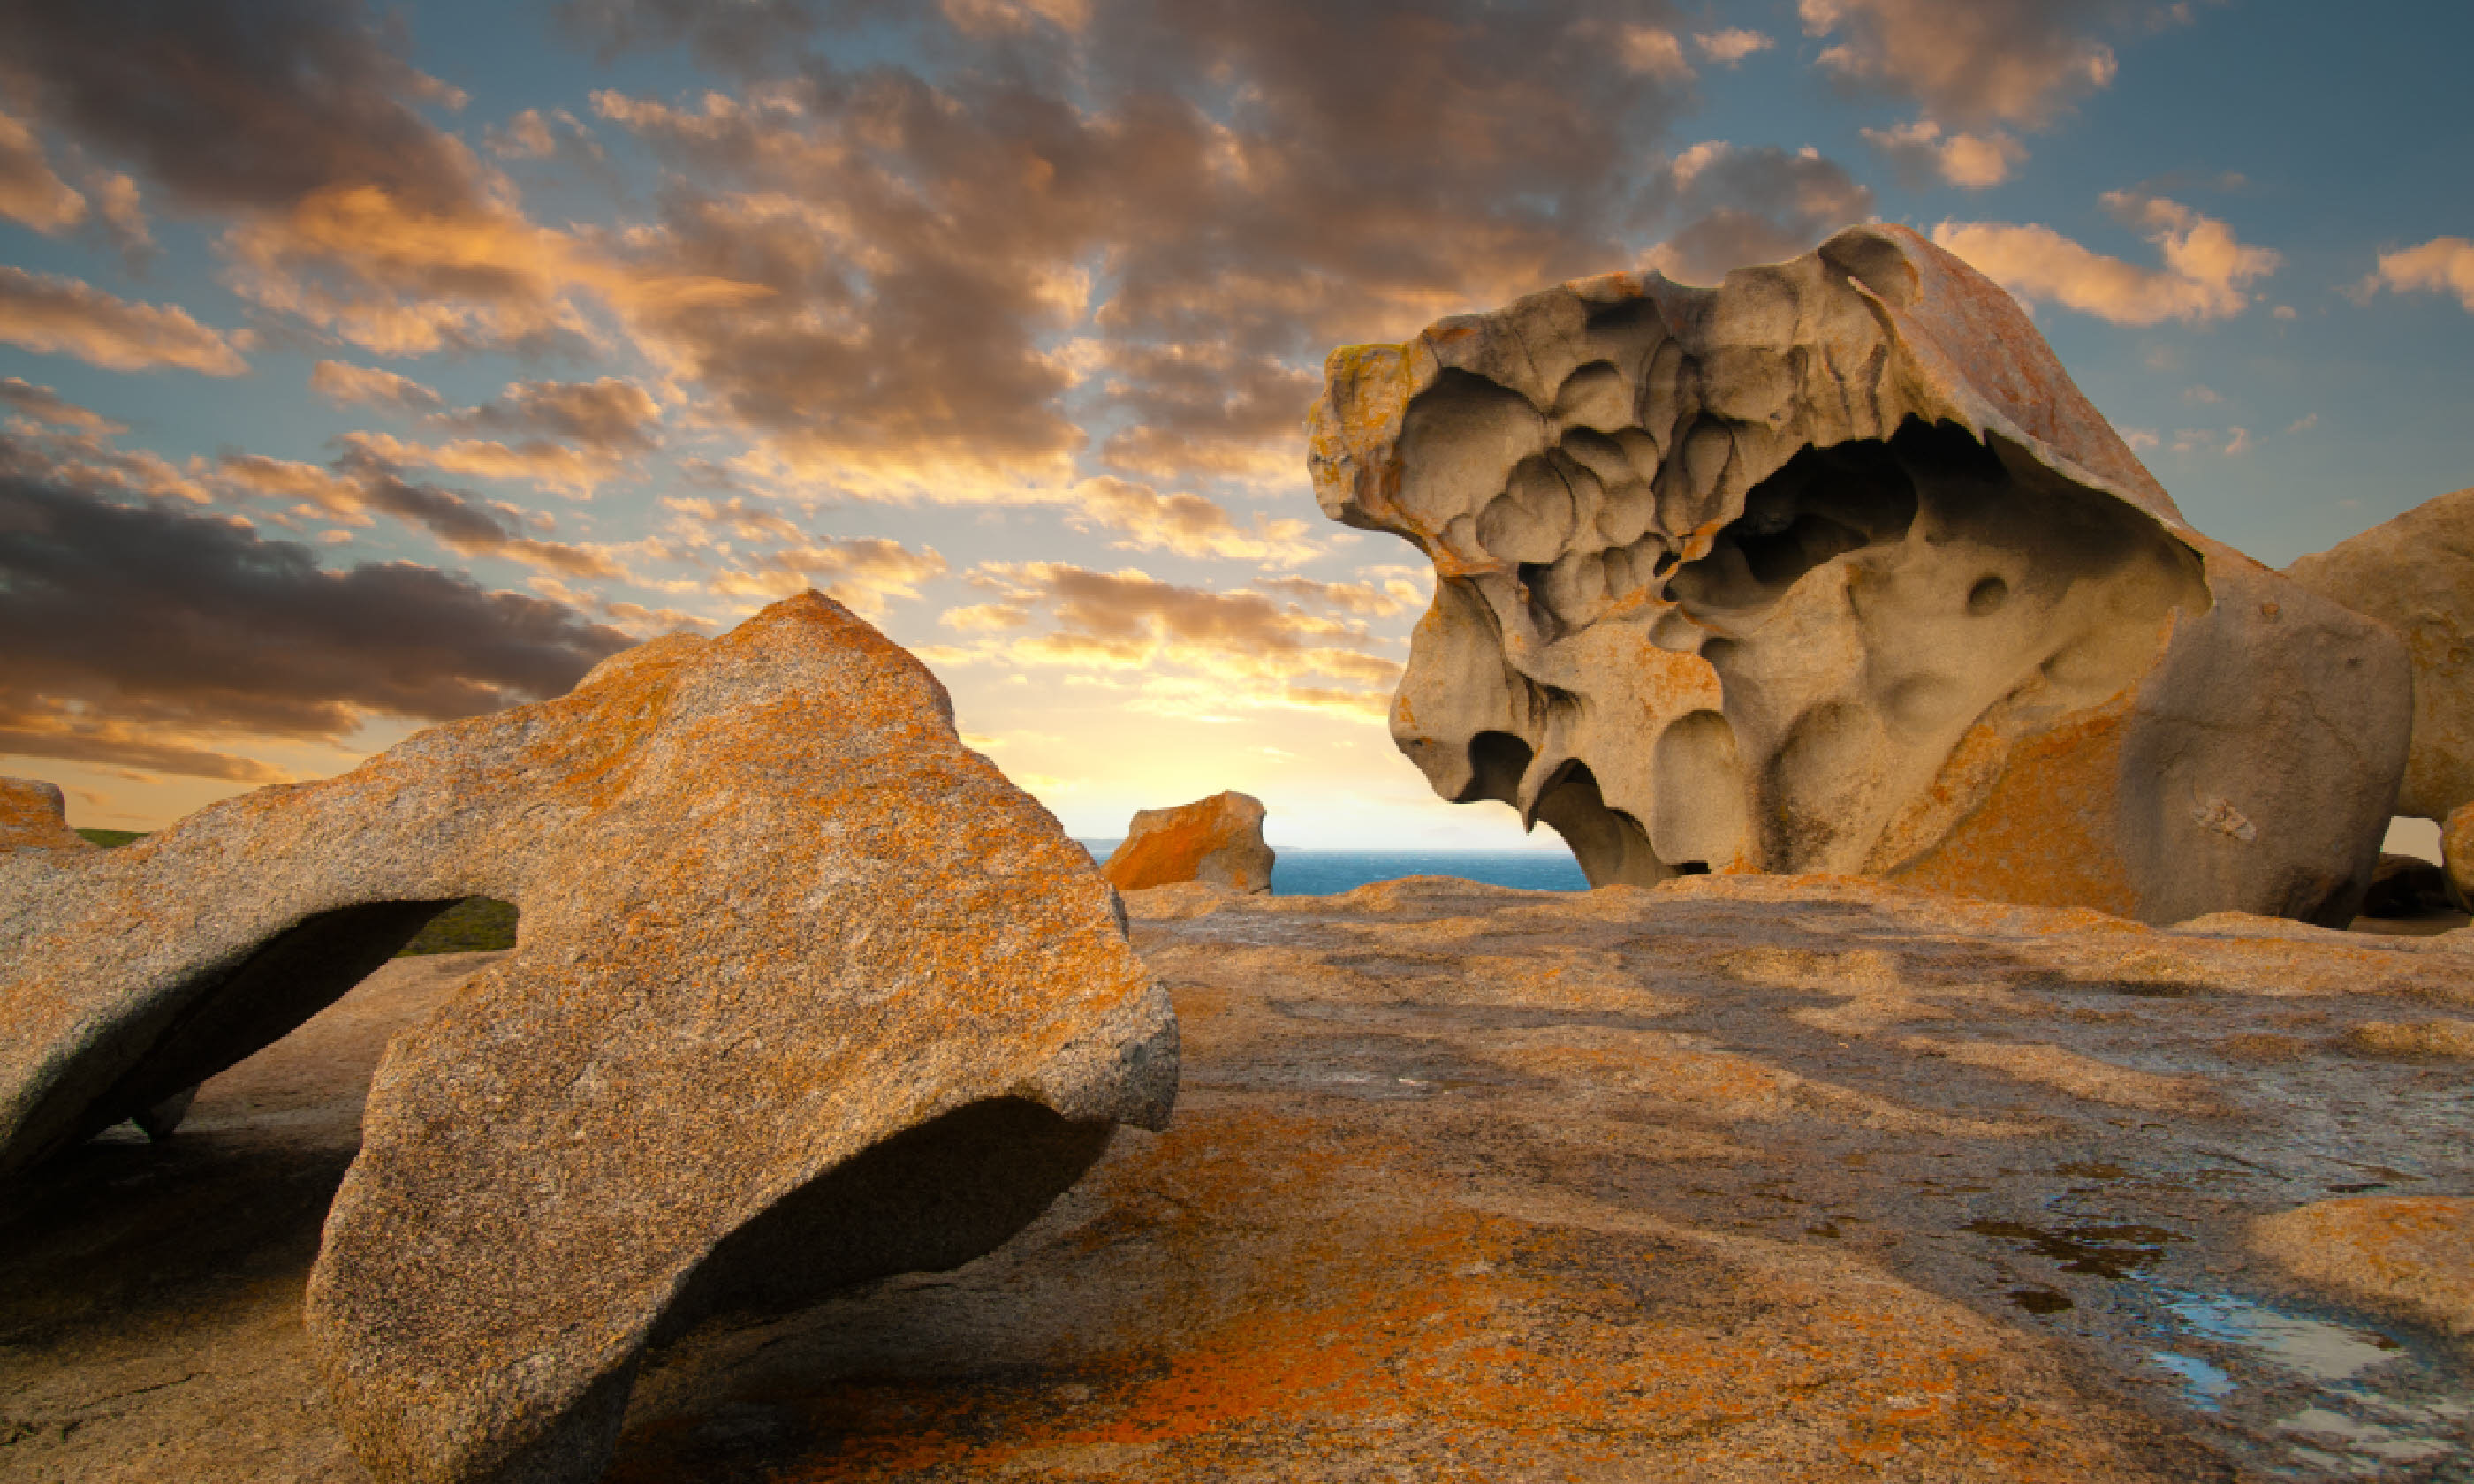 Kangaroo Island coastline (Shutterstock)